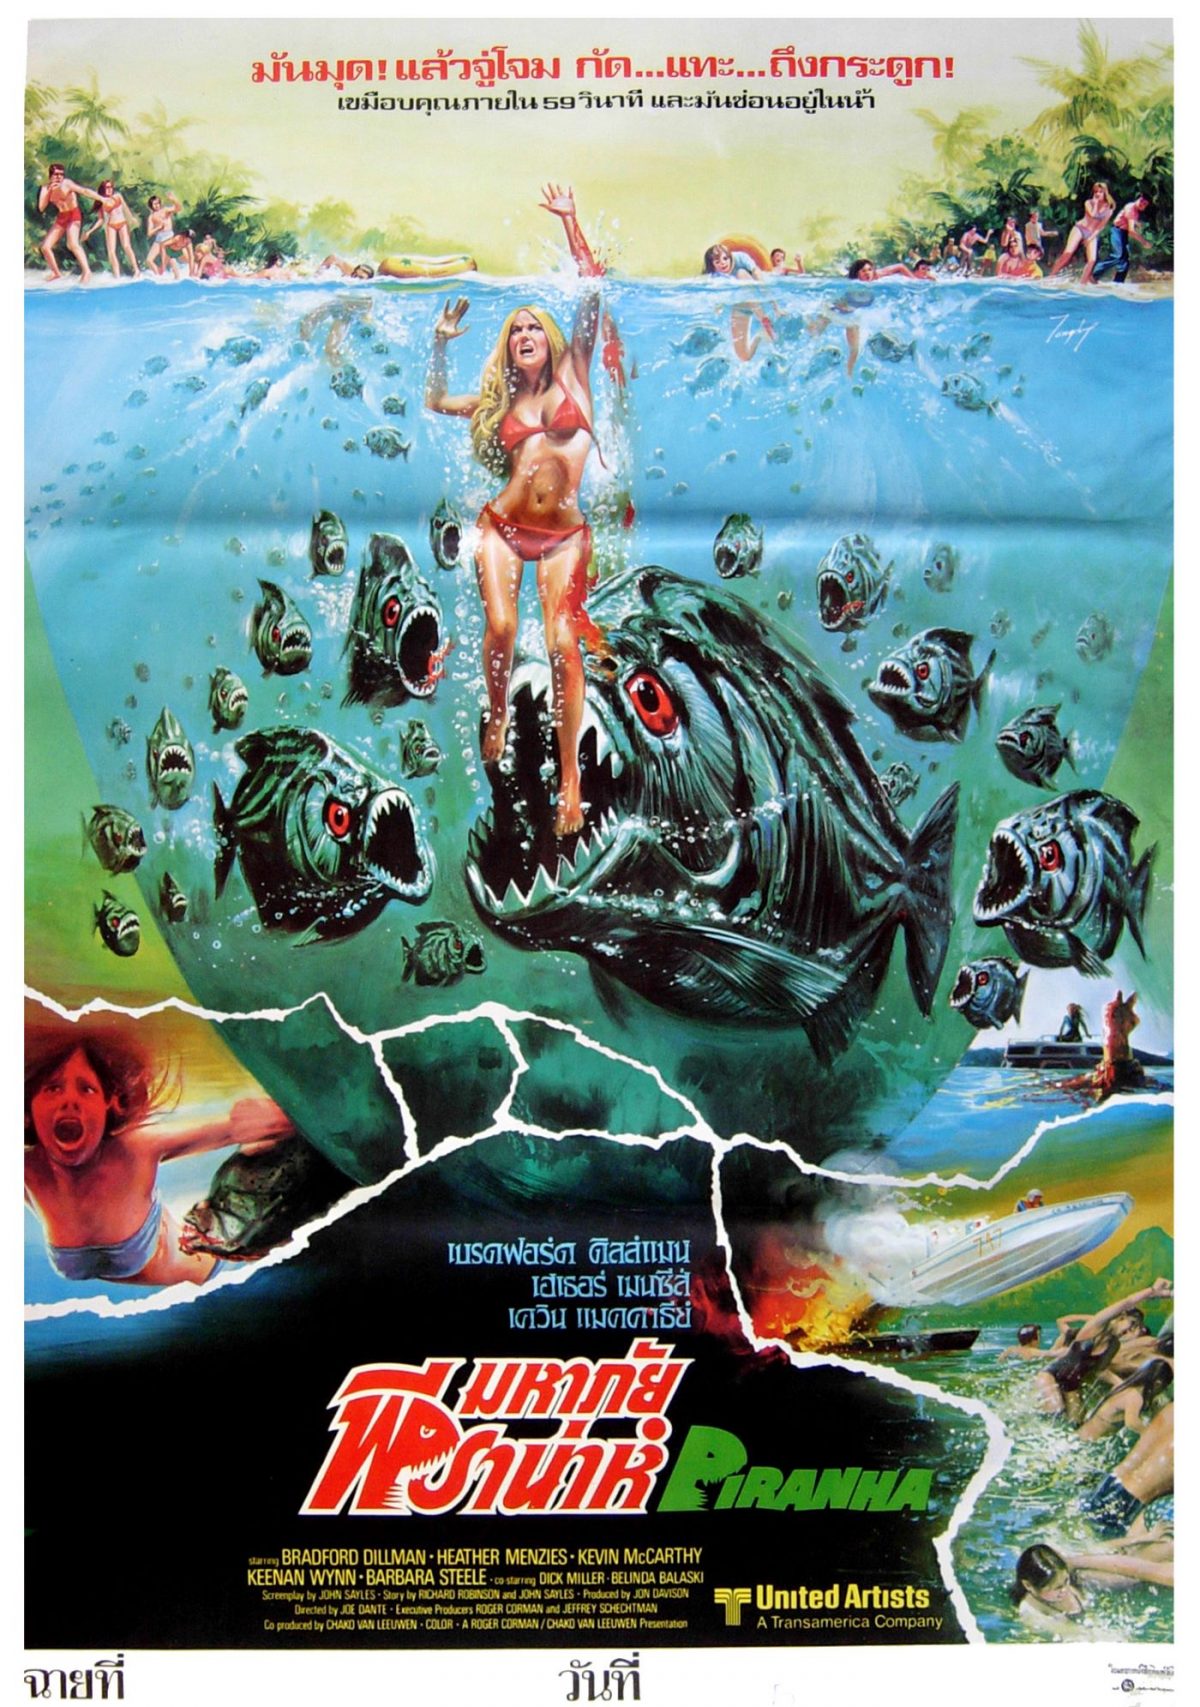 Thailand, movie posters, artwork, Piranha